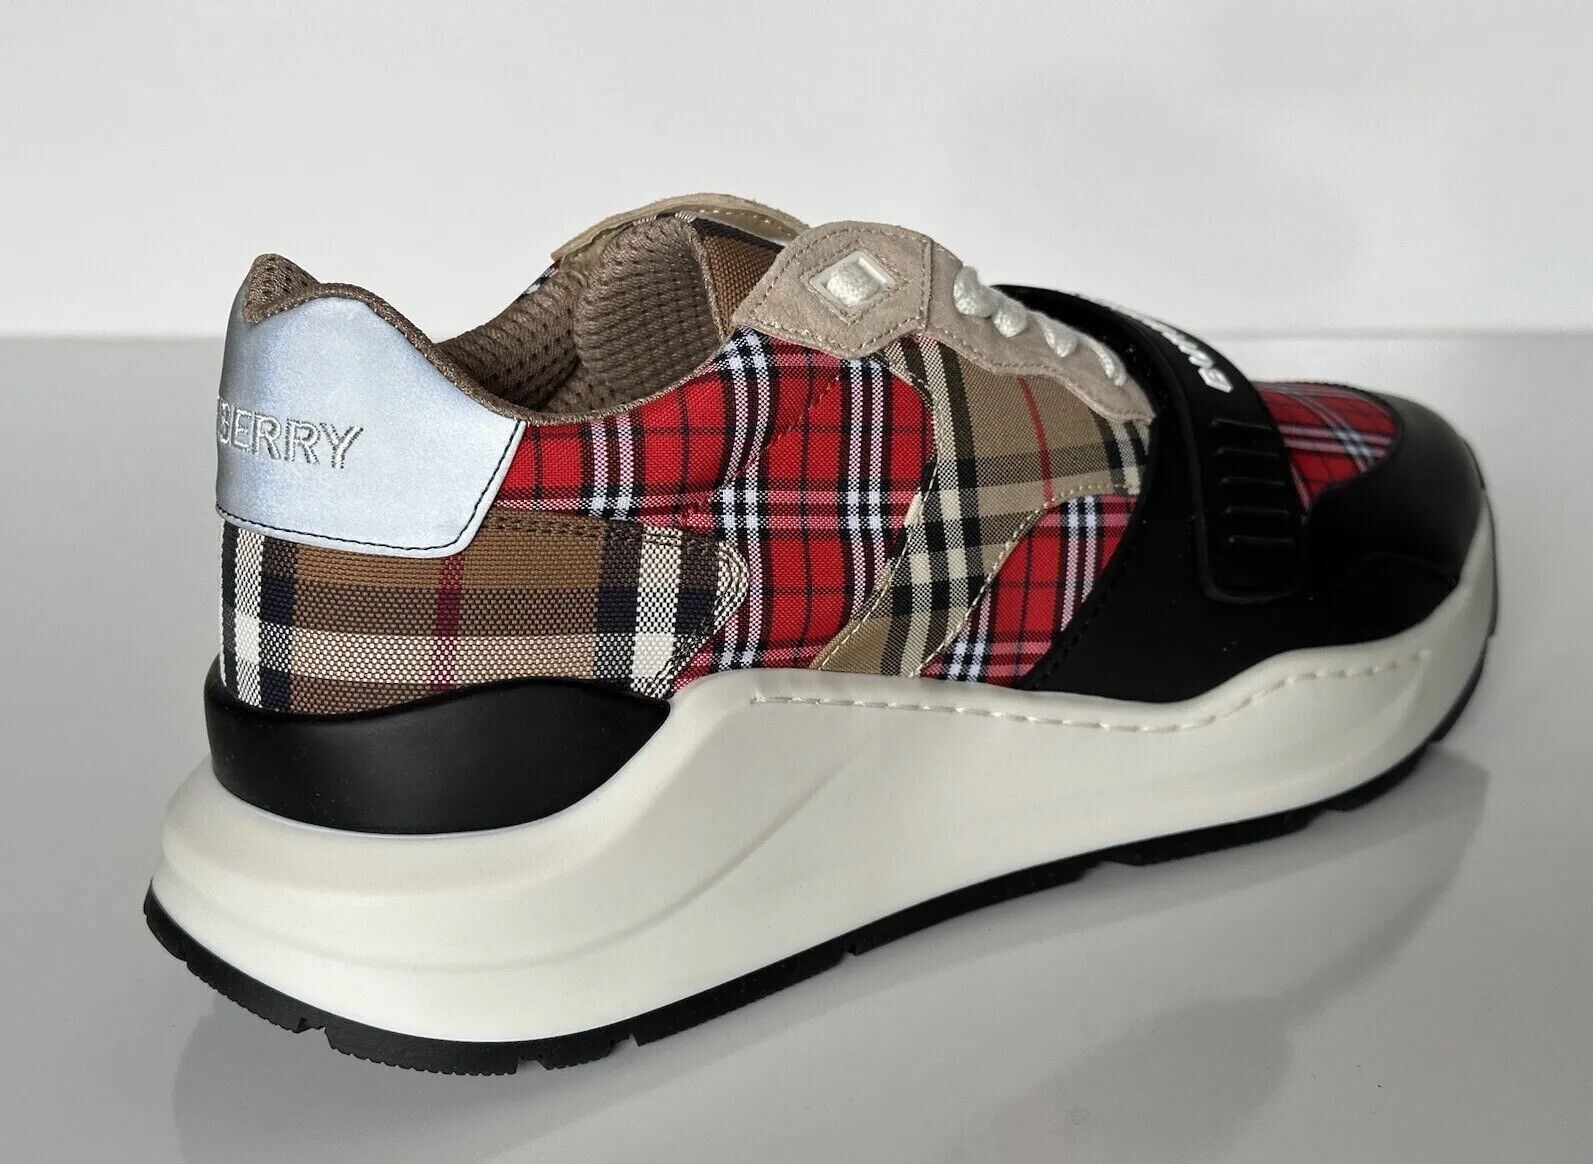 NIB 790 $ Burberry Herren Ramsey Mehrfarbige Sneakers 11 US (44 Euro) 8048632 Italien 